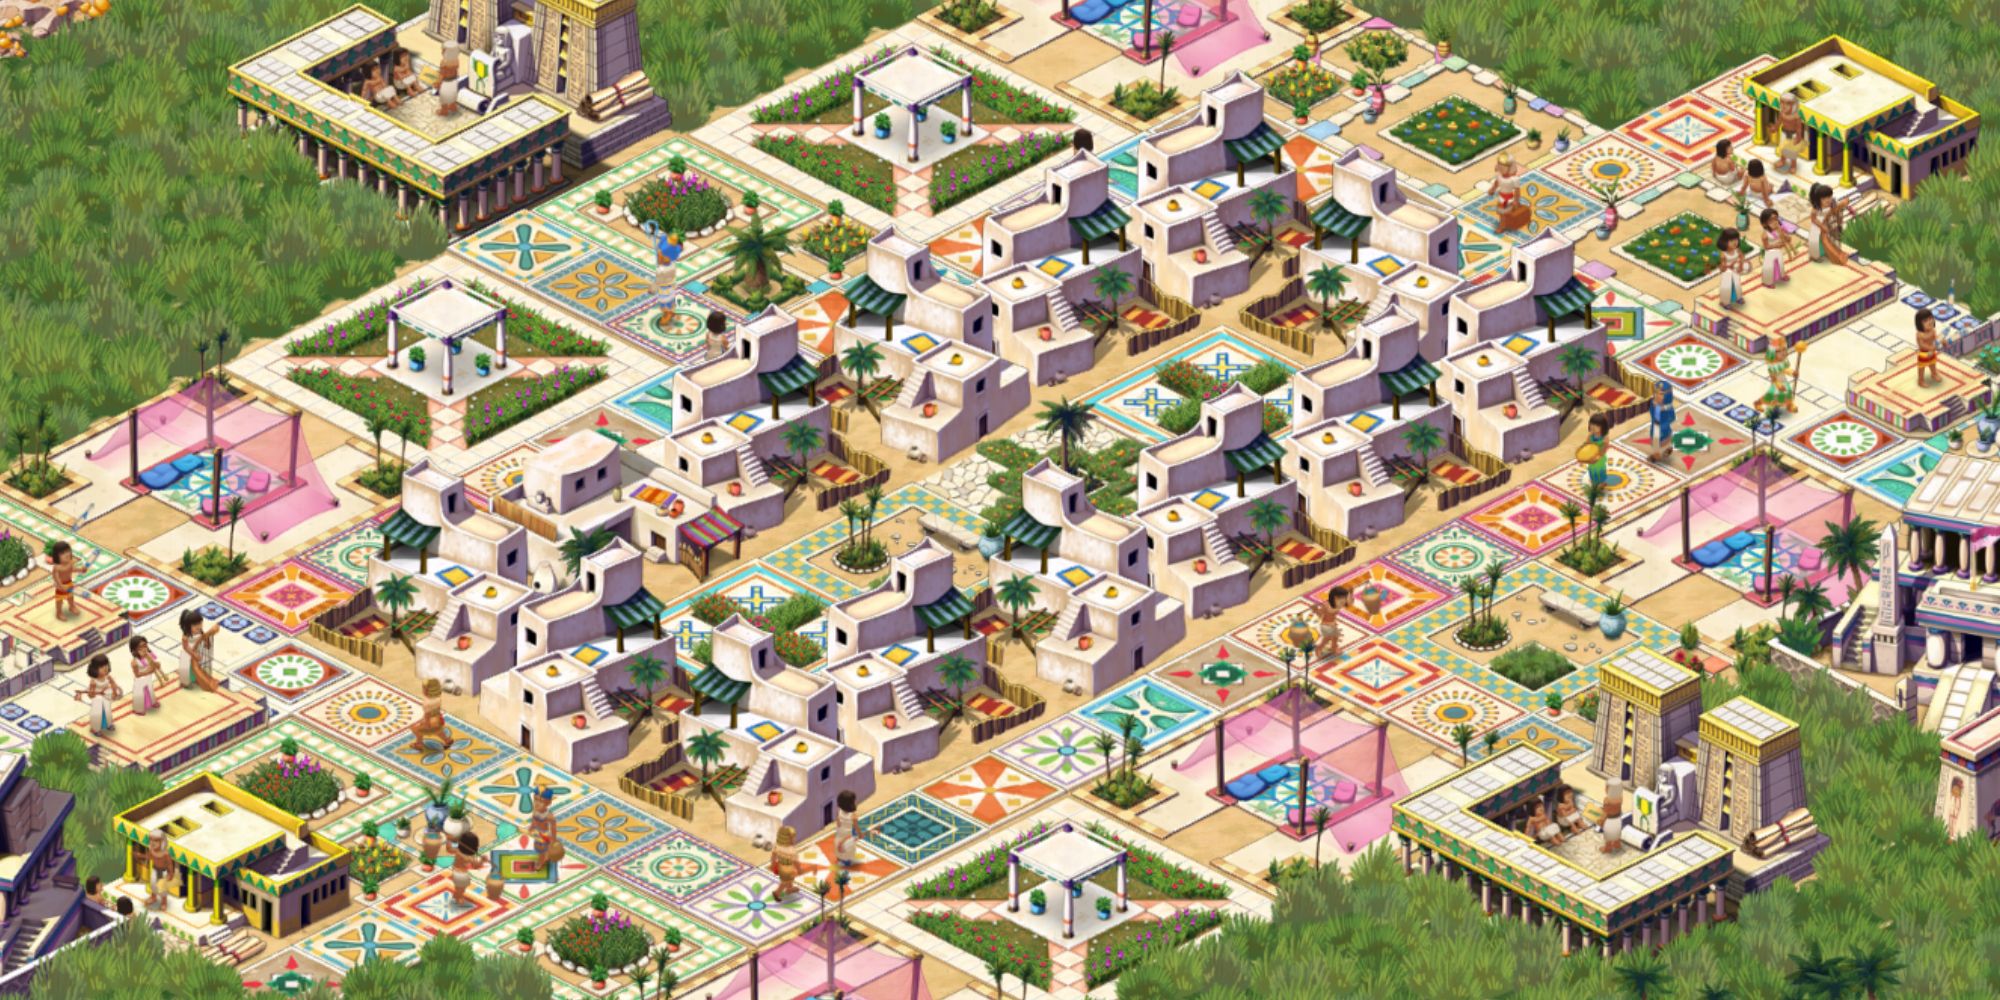 Pharaoh A New Era Gardens and plazas around housing